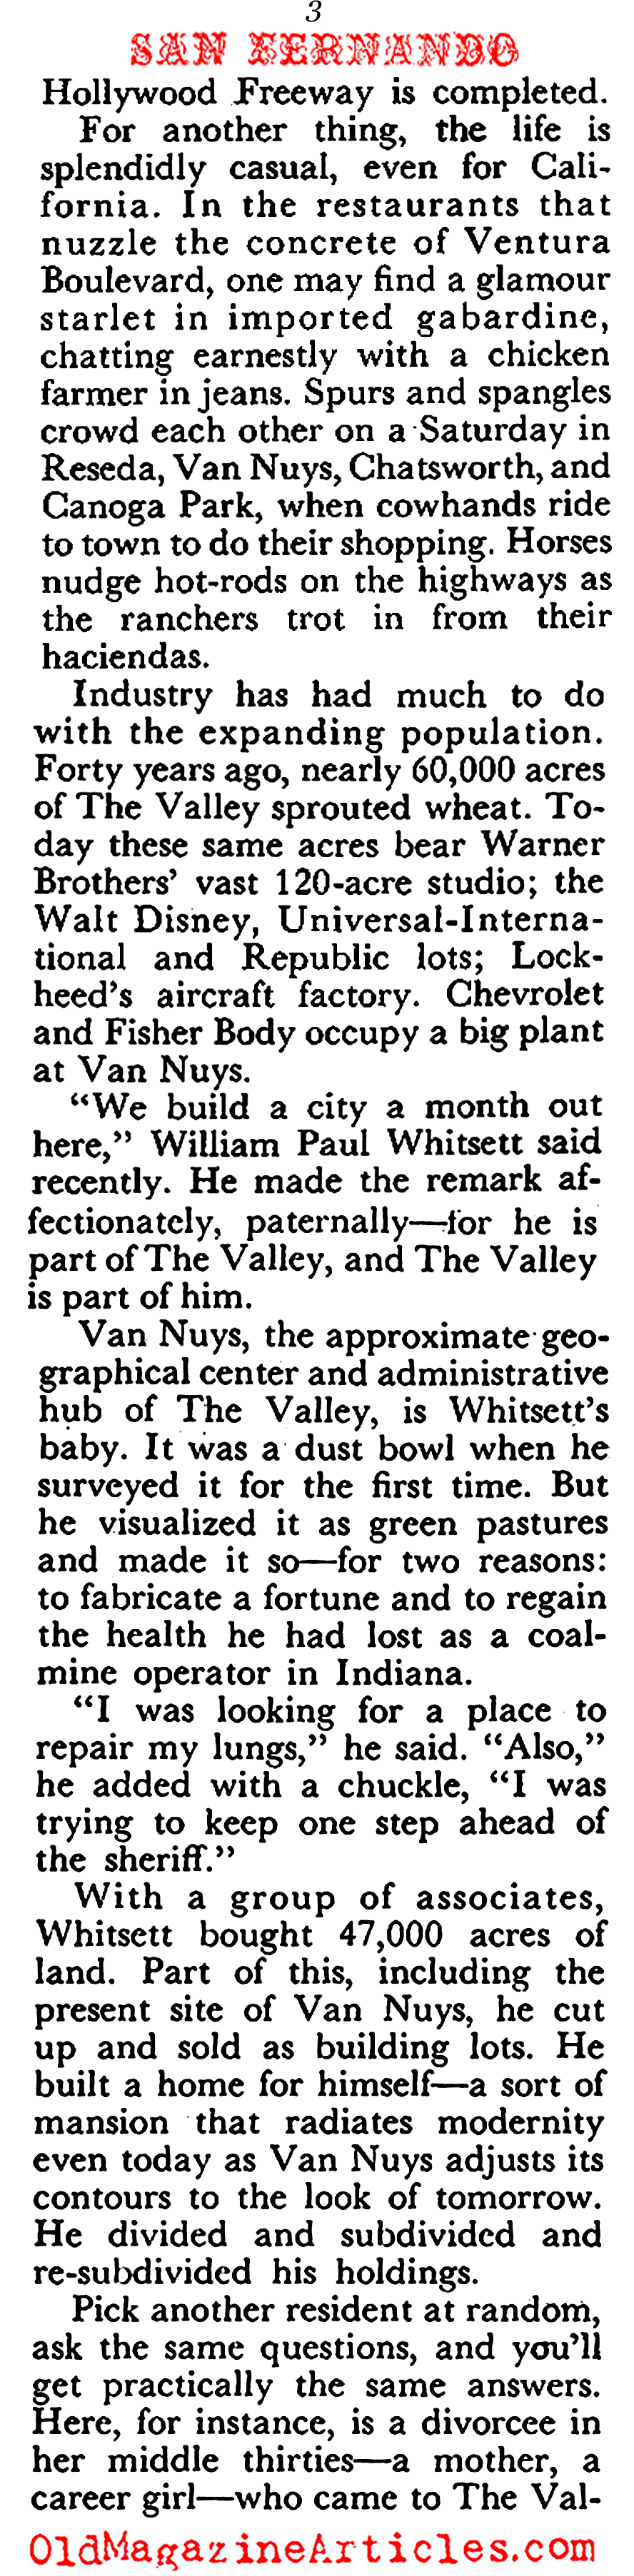 The San Fernando Valley (Coronet Magazine, 1951)